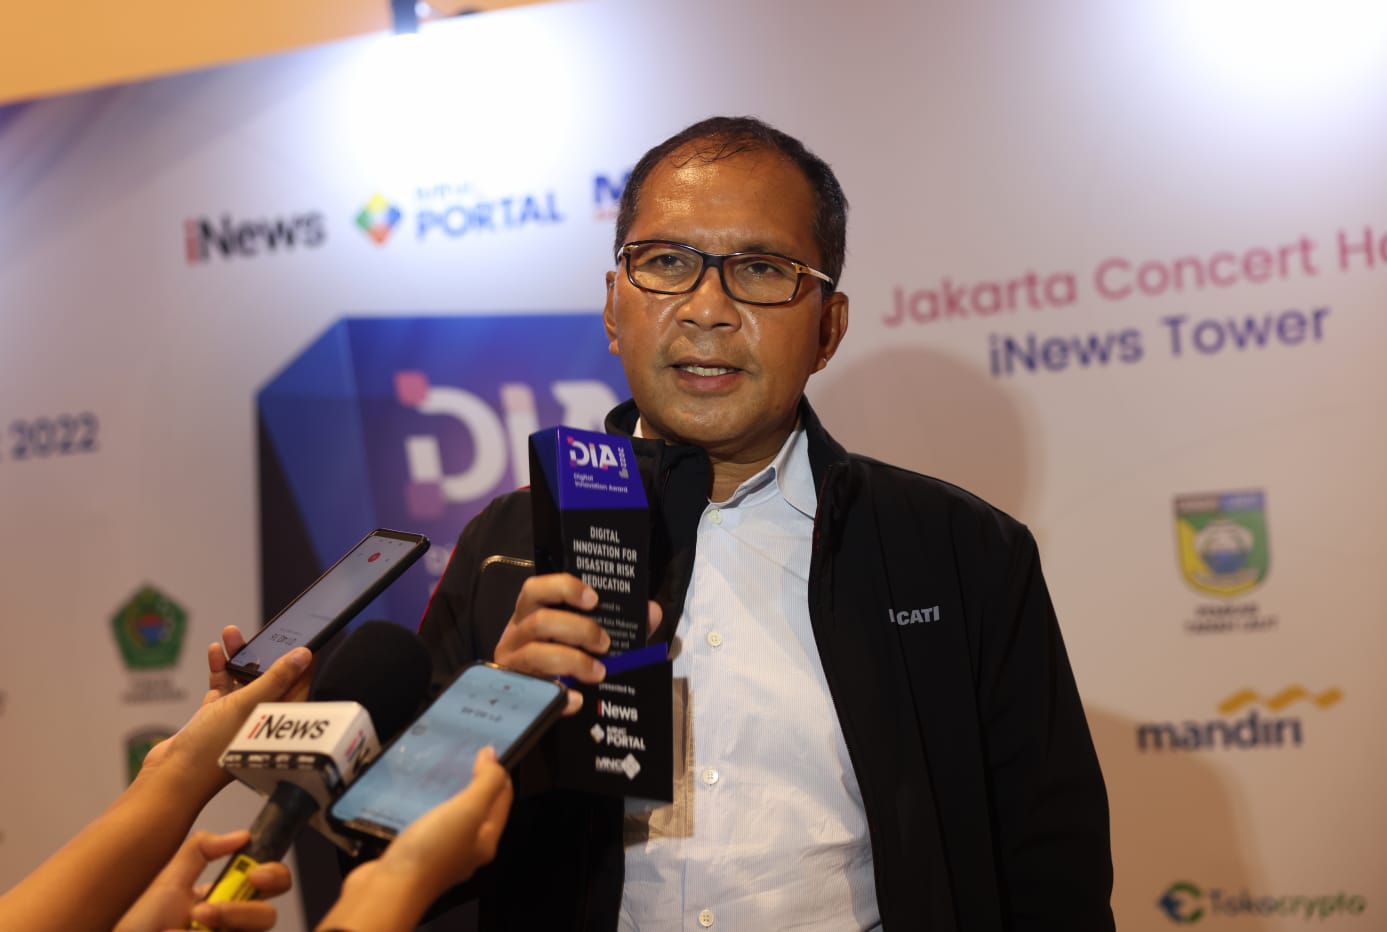 Wali Kota Makassar Sabet Penghargaan Digital Innovation For Public Service 2022